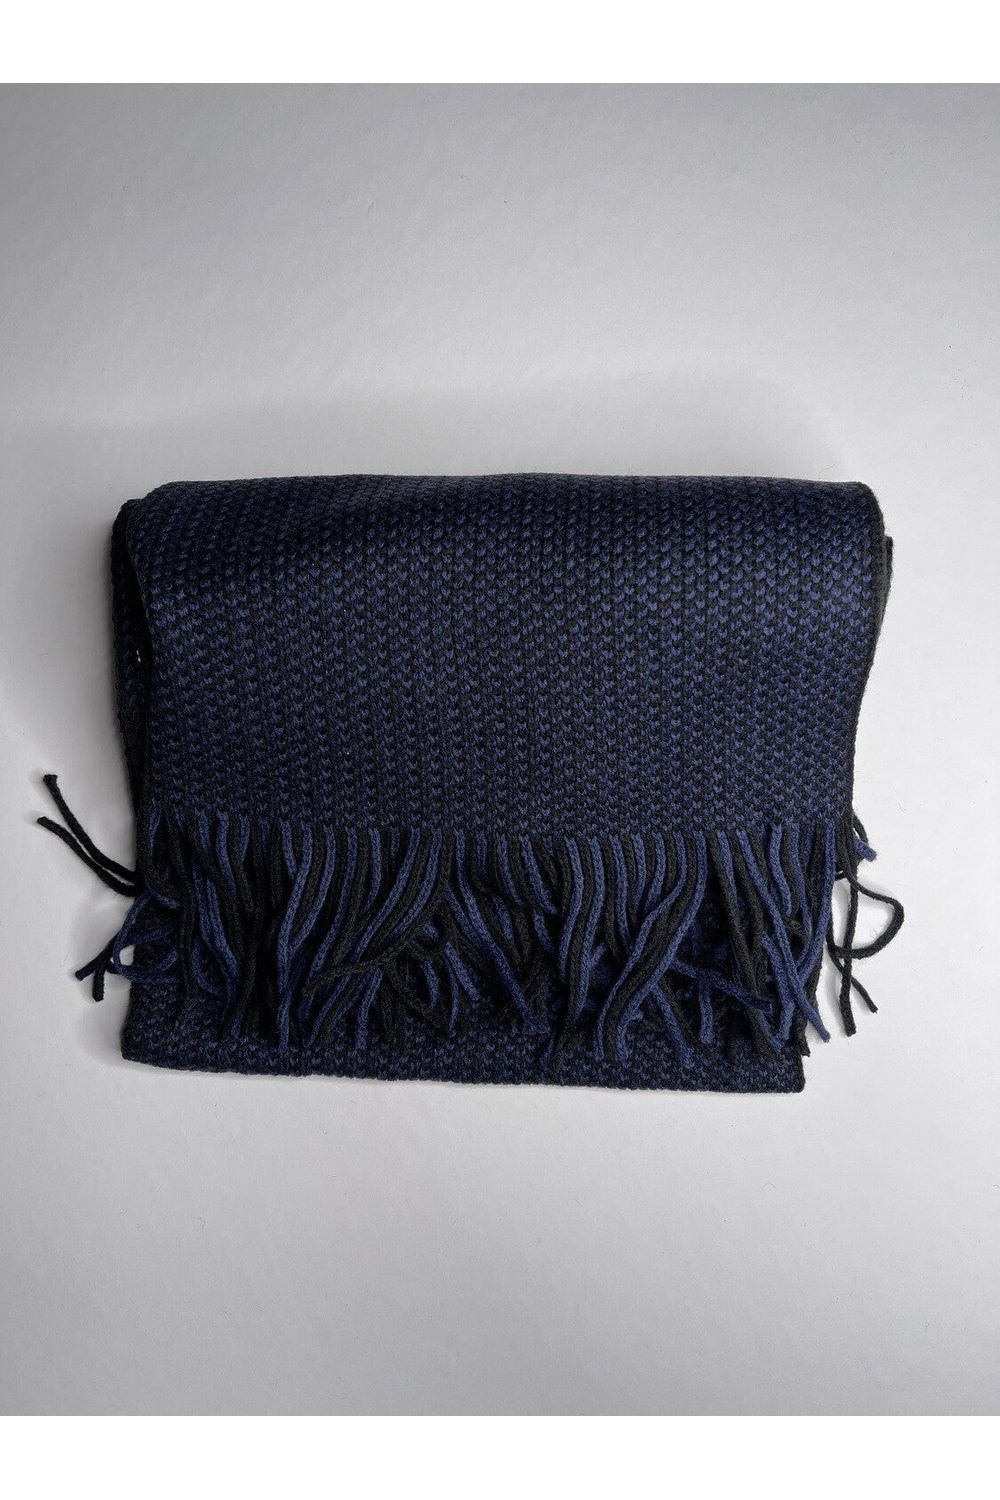 Men's rectangular knitted scarf